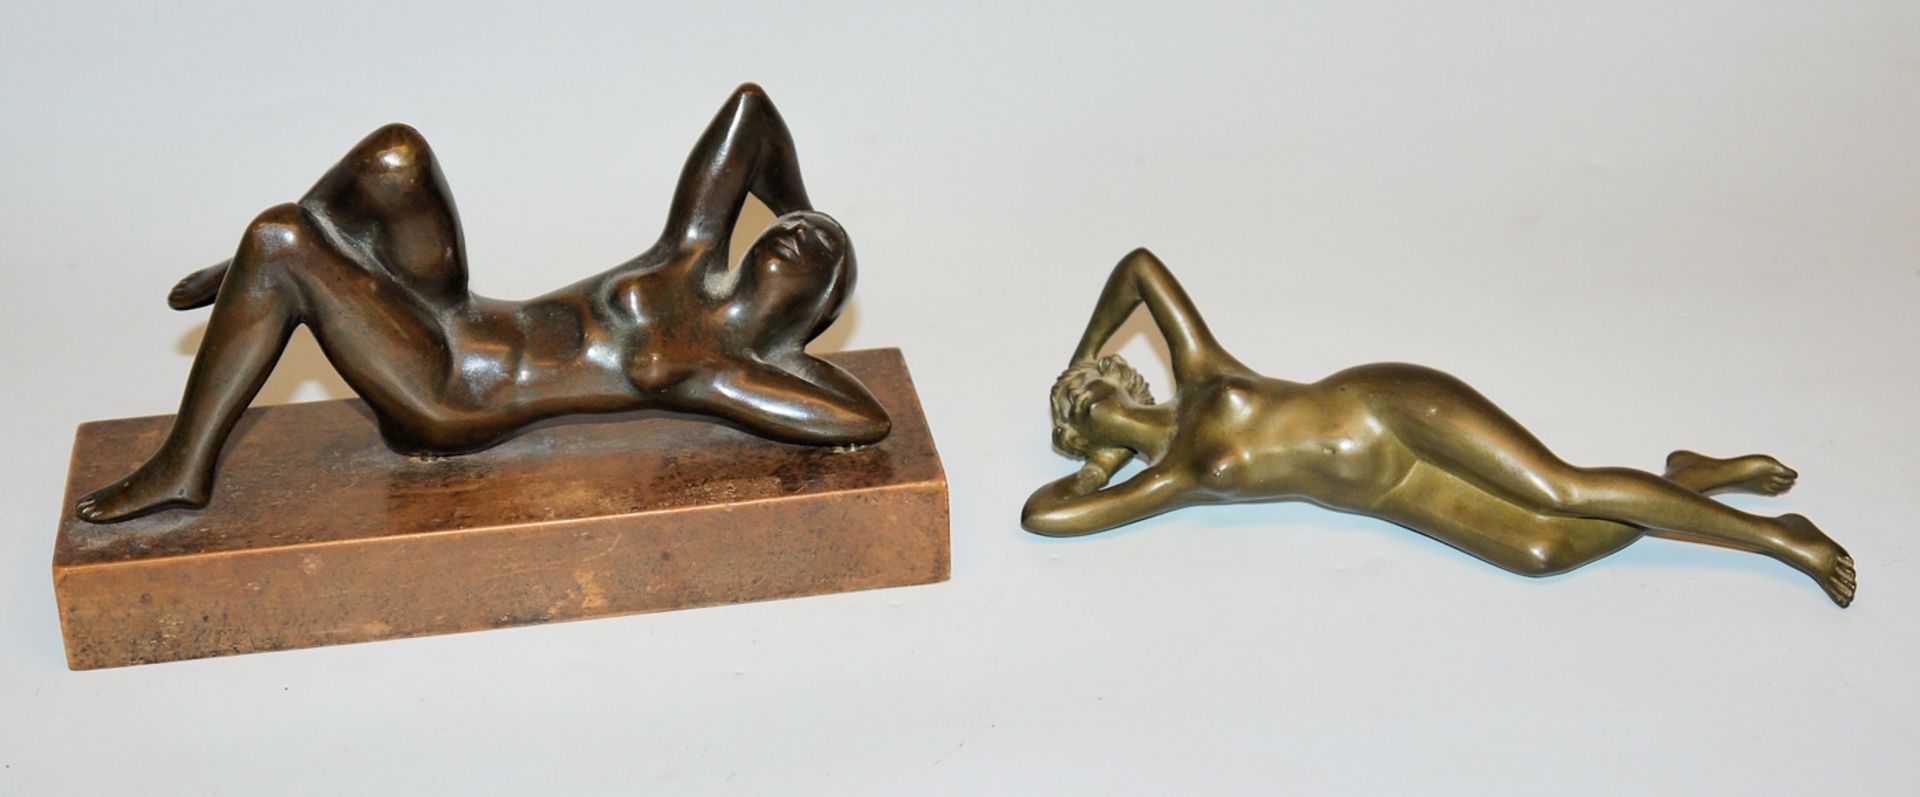 Two lolling female nudes, bronze sculptures c. 1920